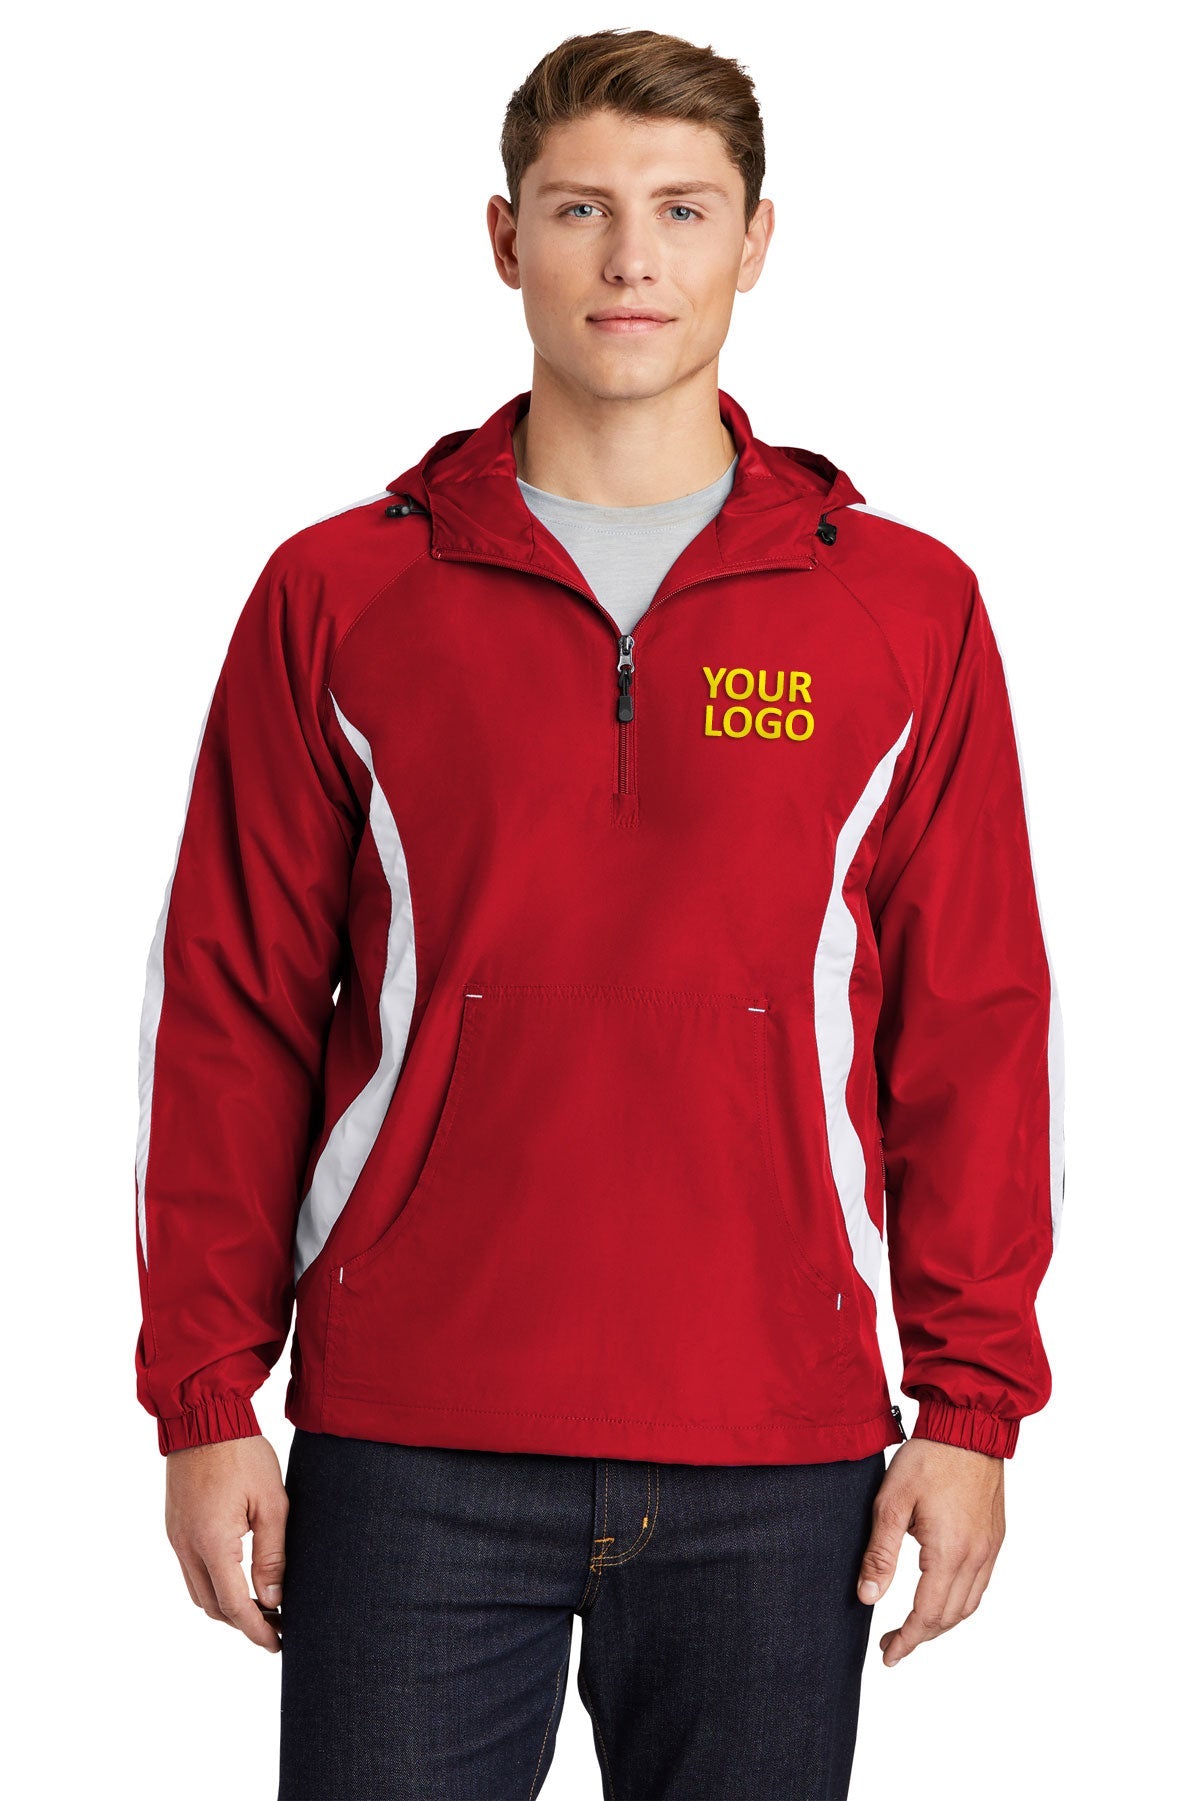 Sport-Tek True Red/White JST63 promotional jackets company logo